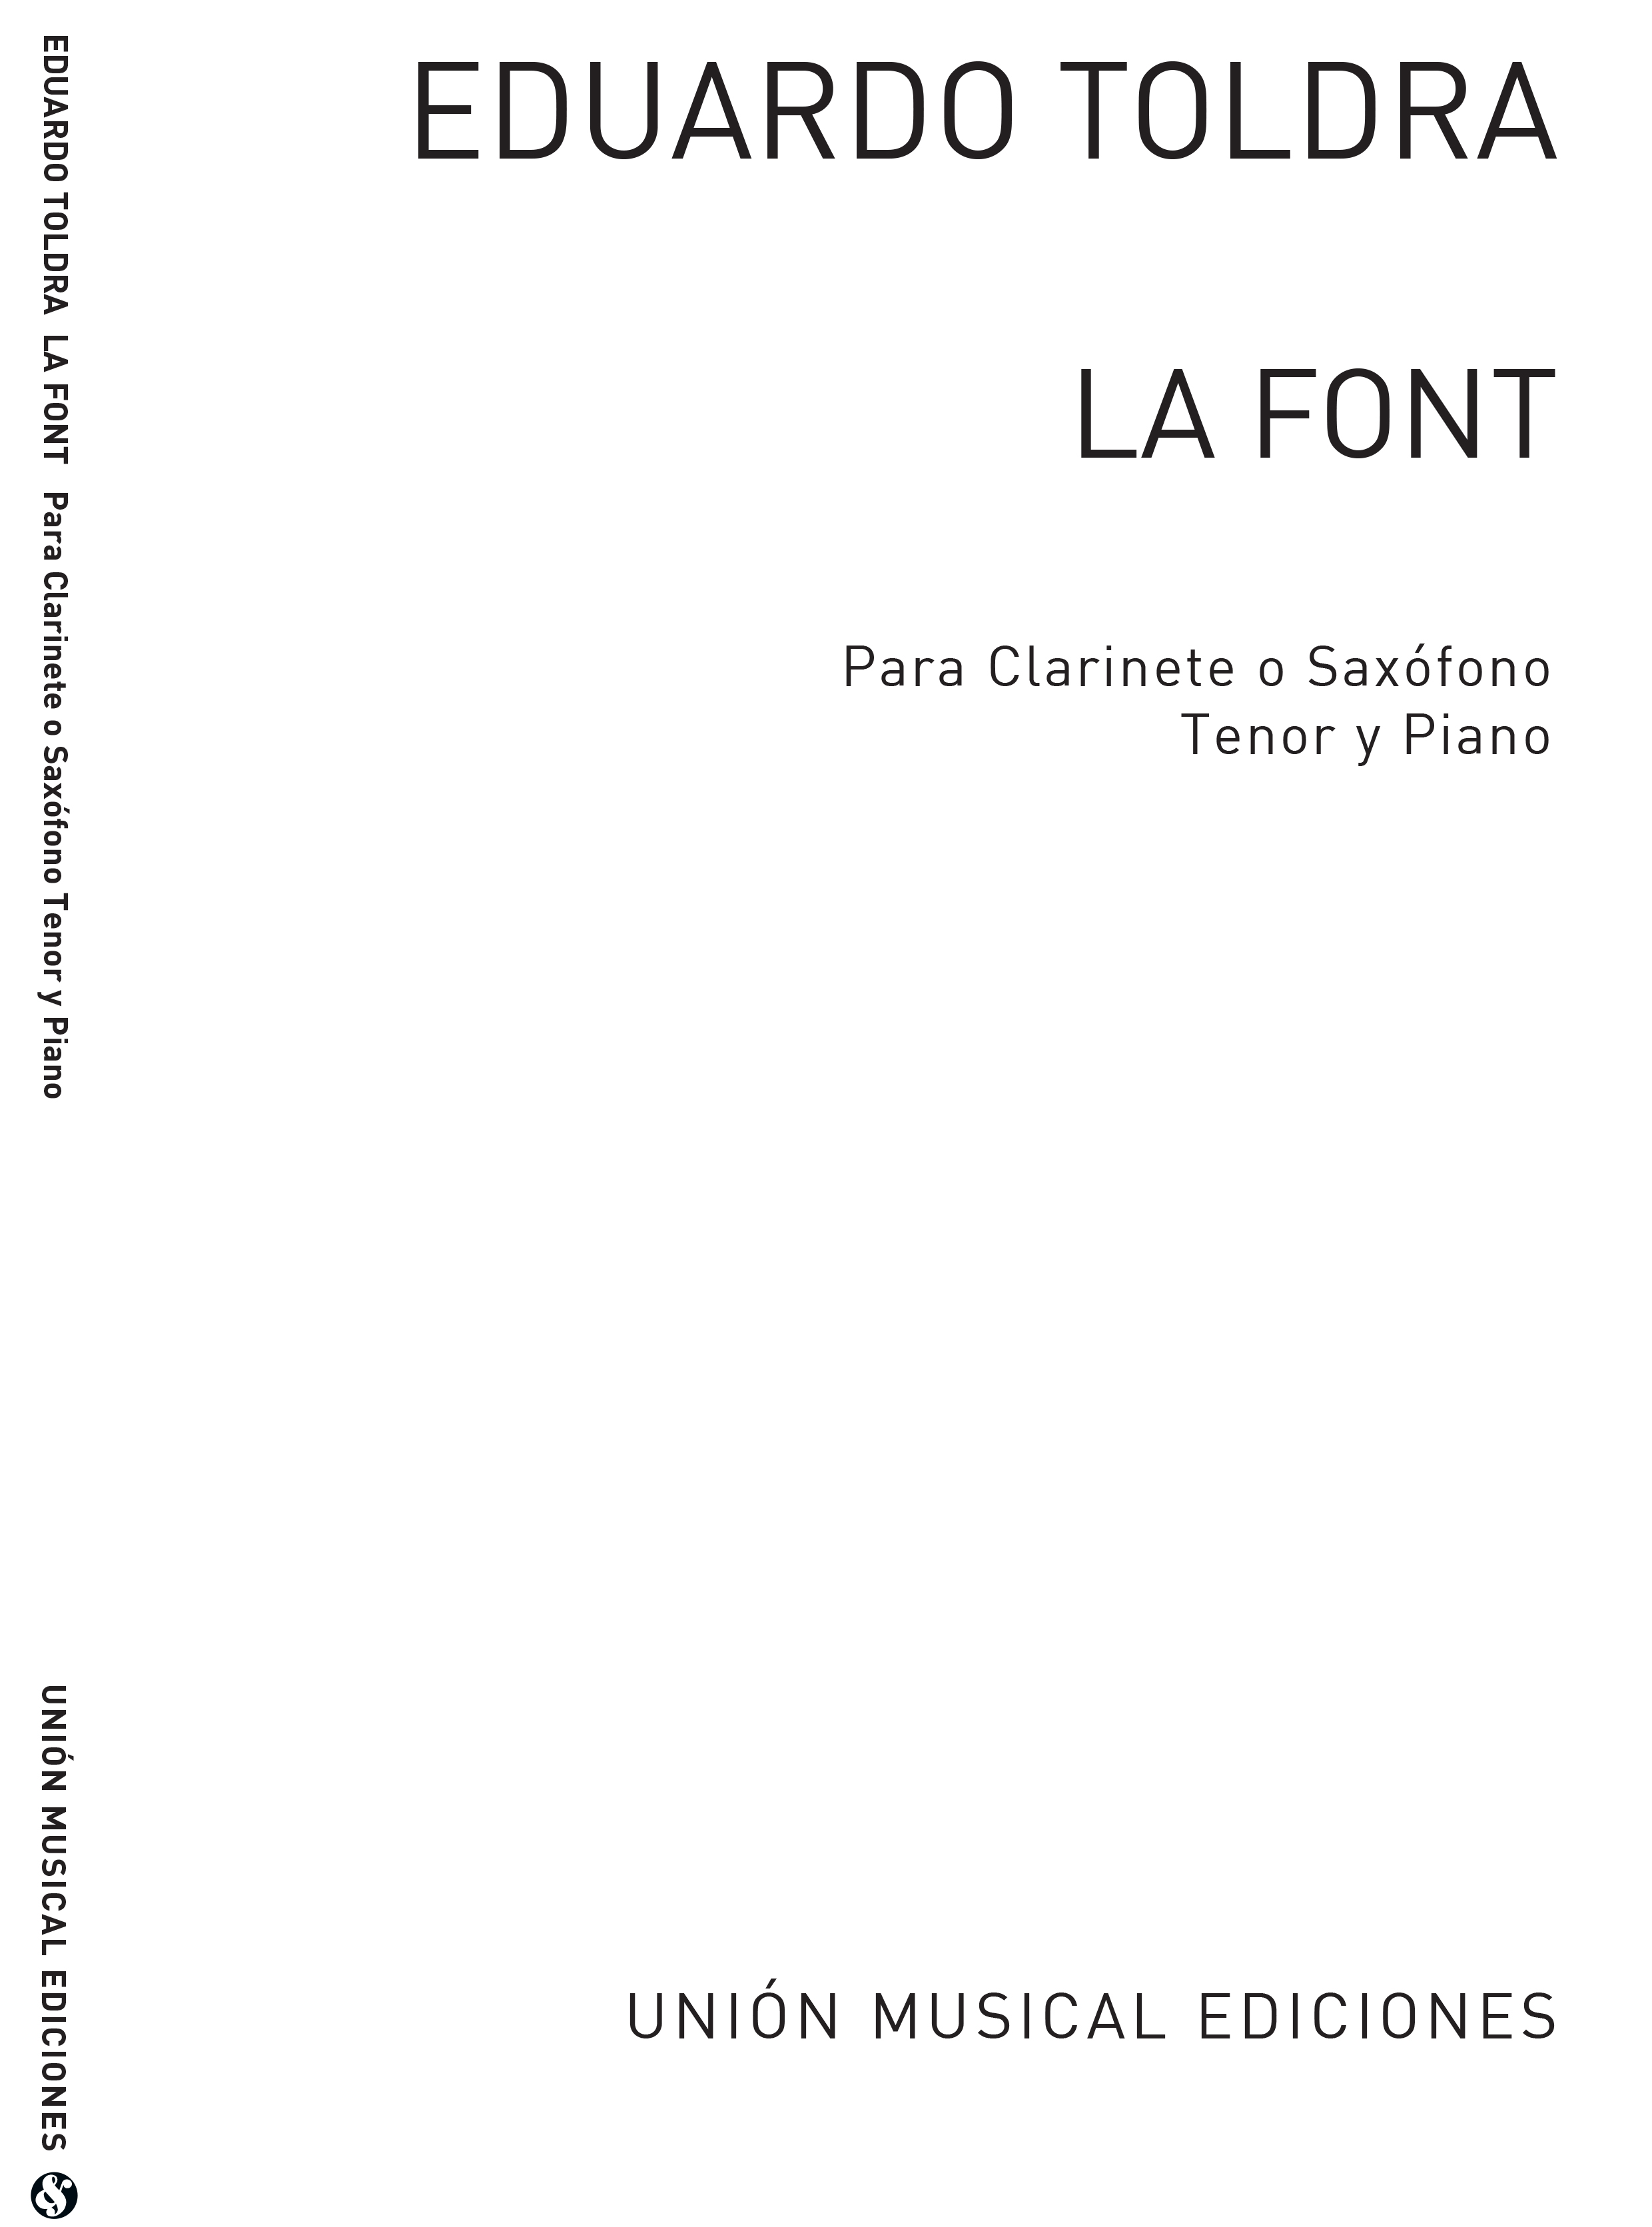 Toldra: La Font (Amaz) for Tenor Saxophone and Piano